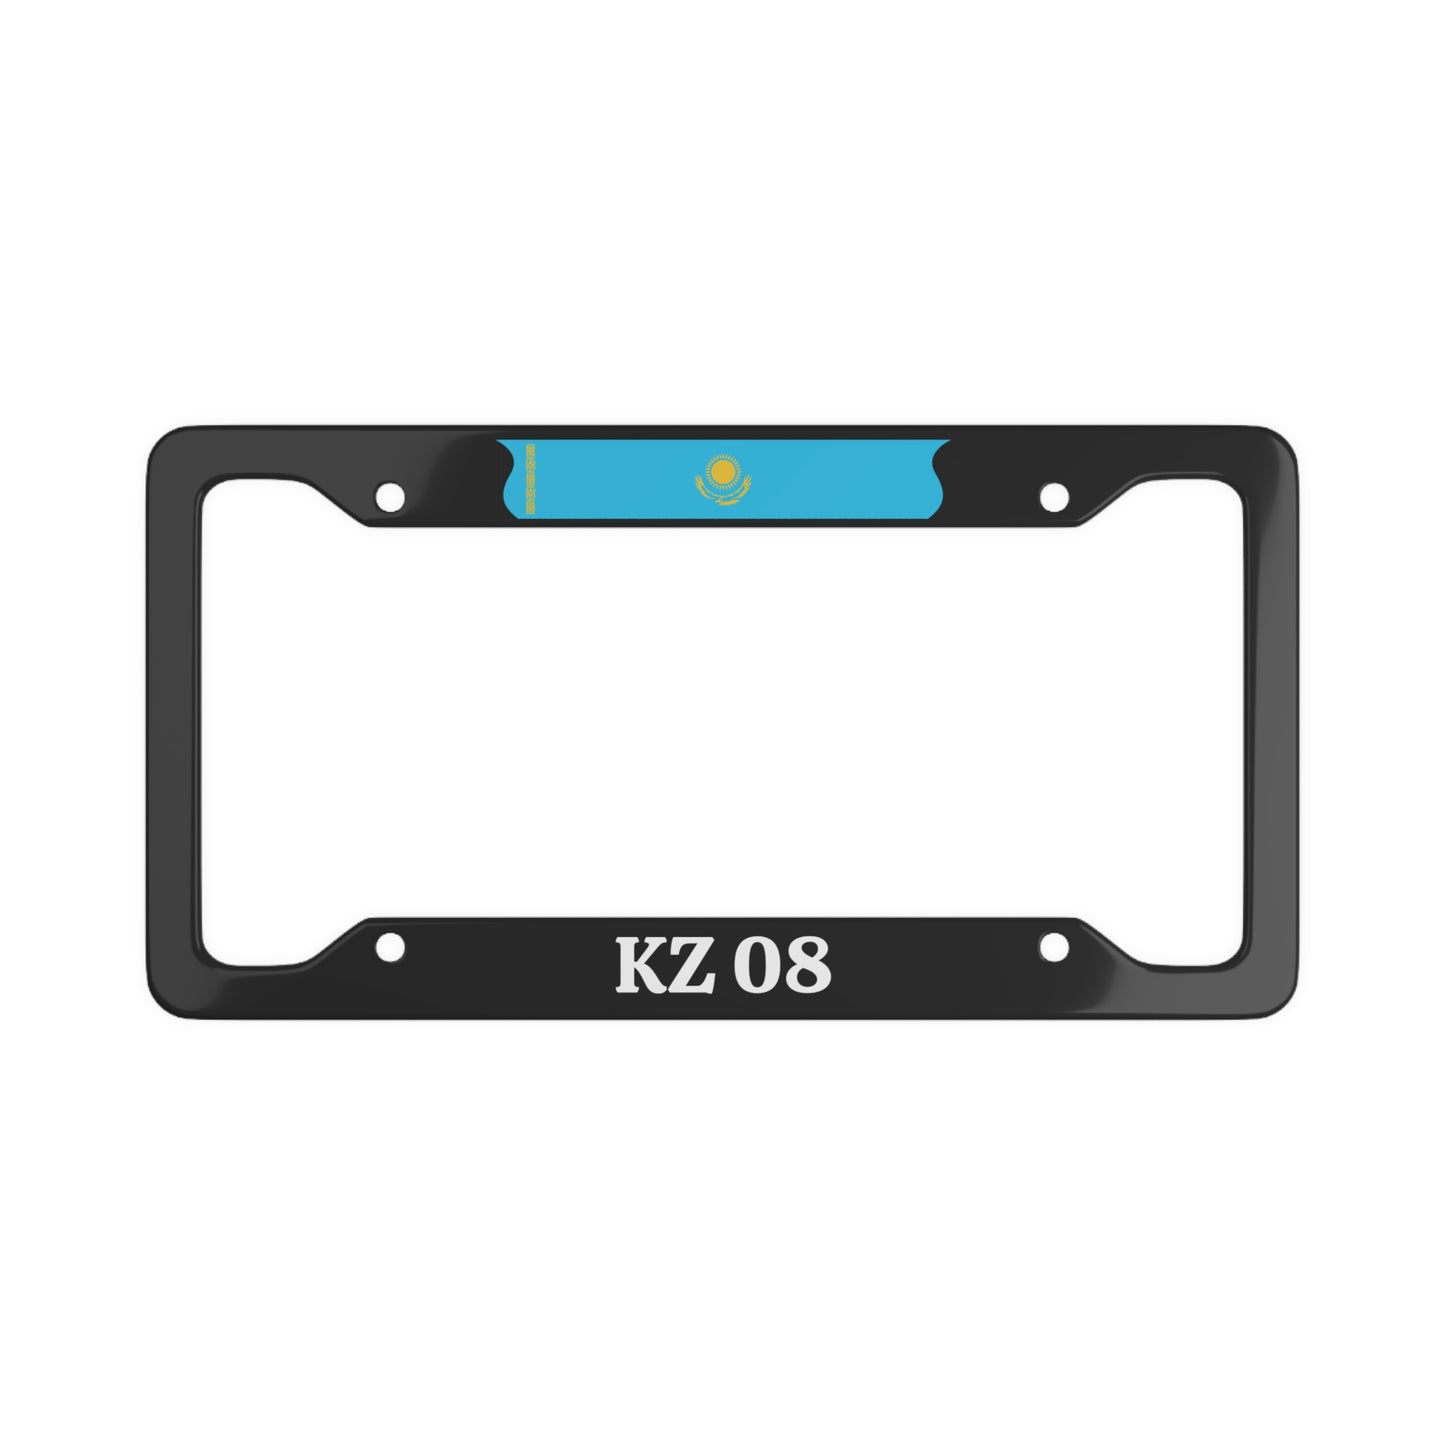 KZ 08 License Plate Frame